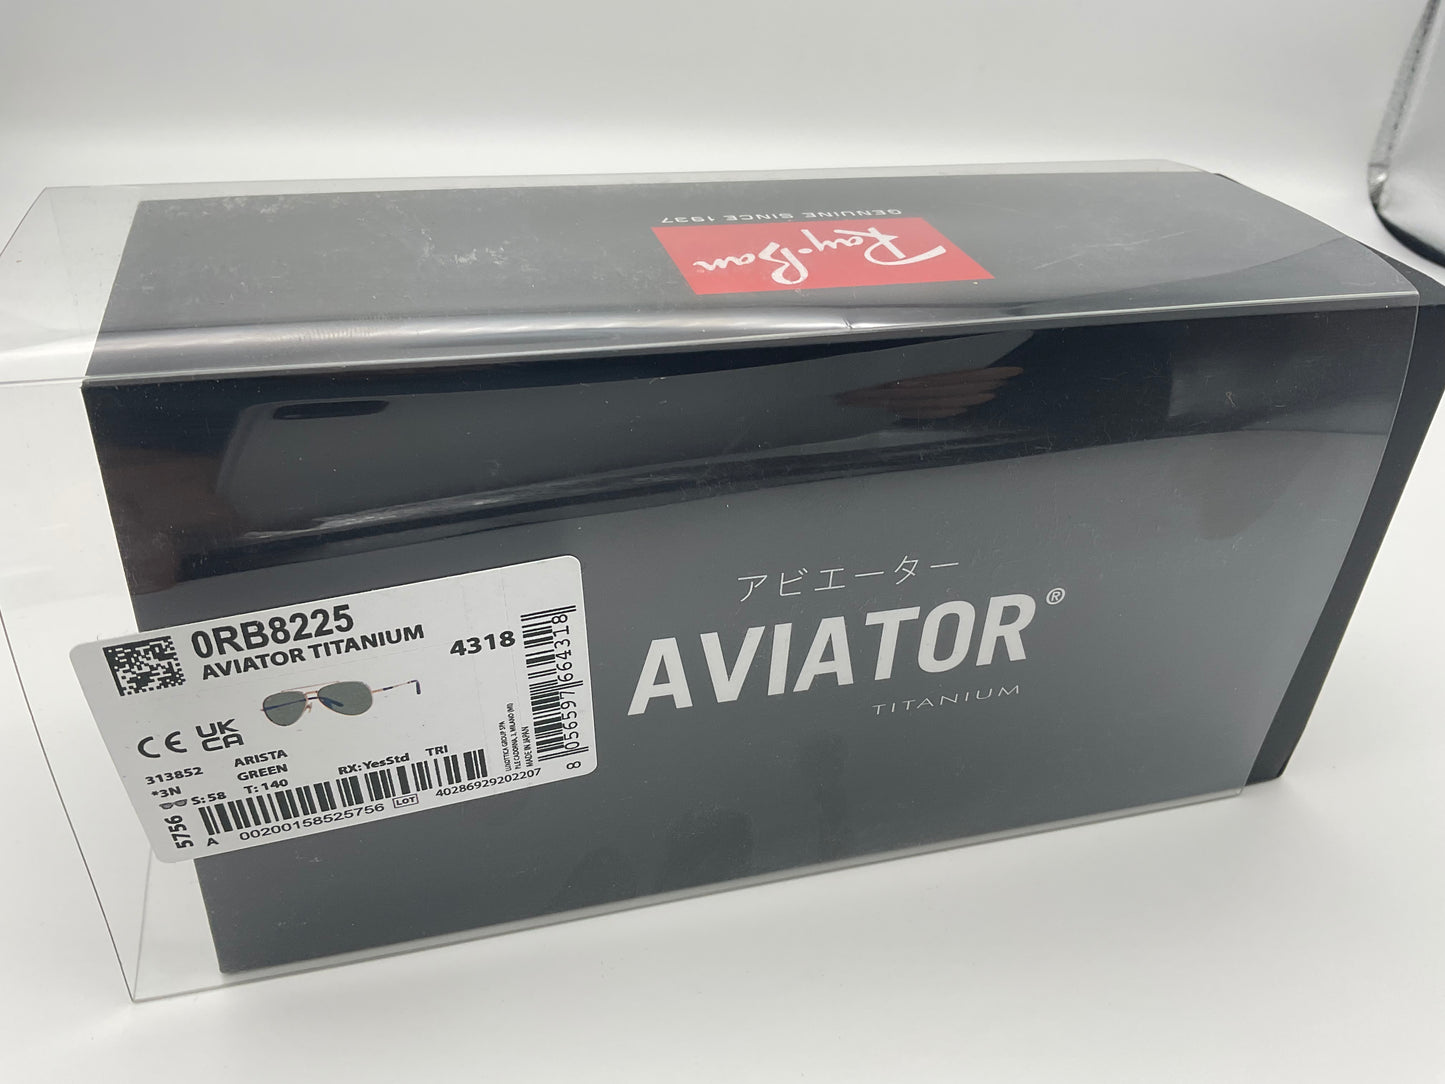 Ray Ban RB 8225 AVIATOR II 58mm TITANIUM Made in Japan